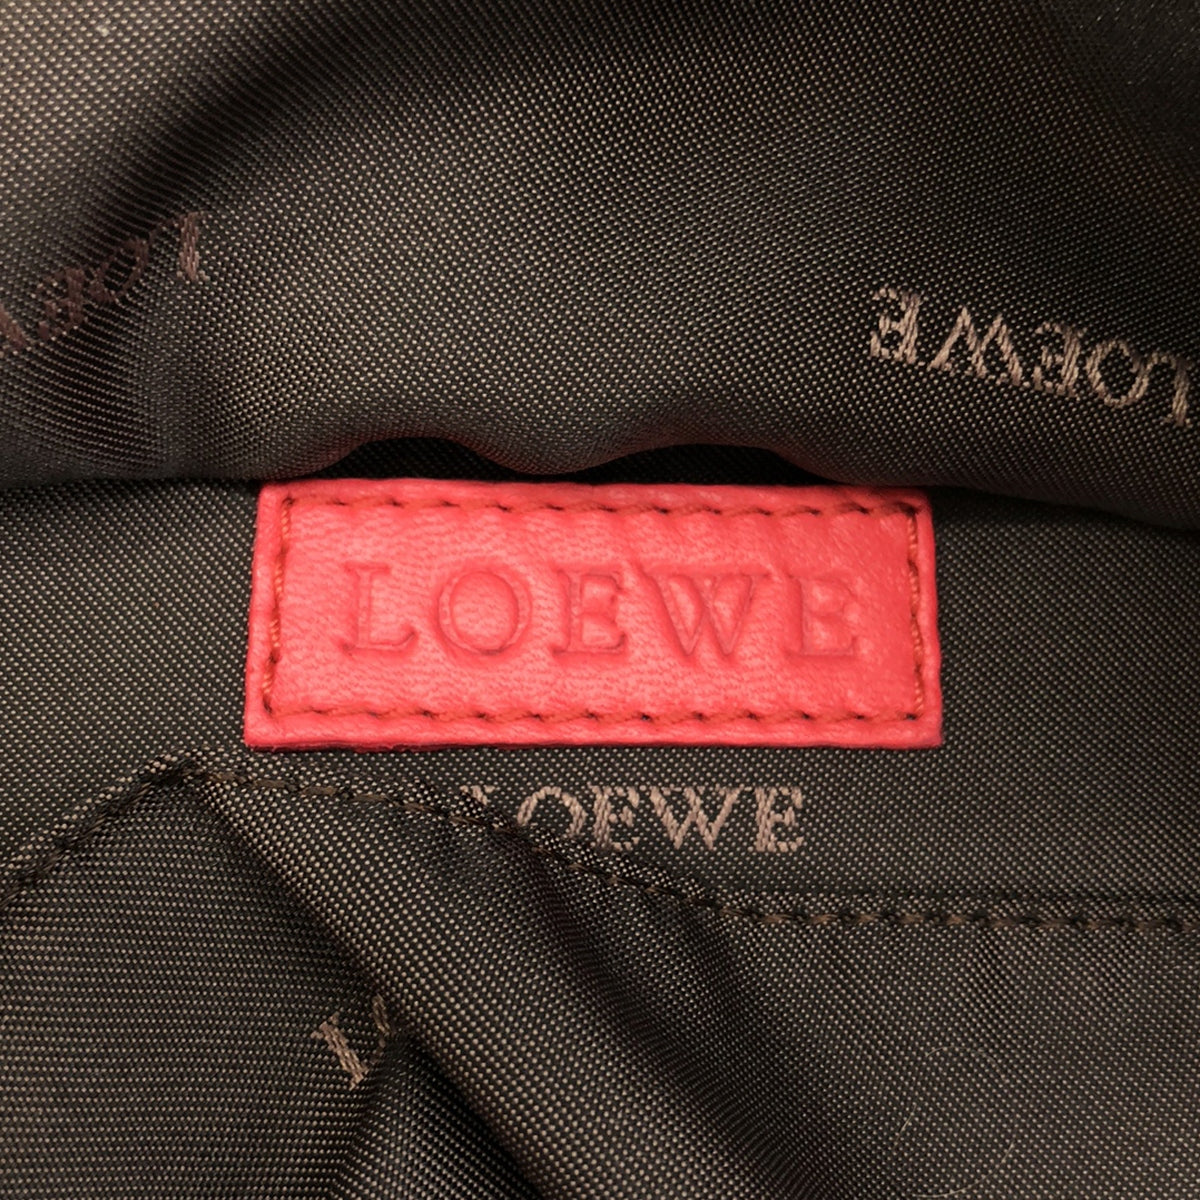 LOEWE / ロエベ | ナッパアイレ ハンドバッグ |